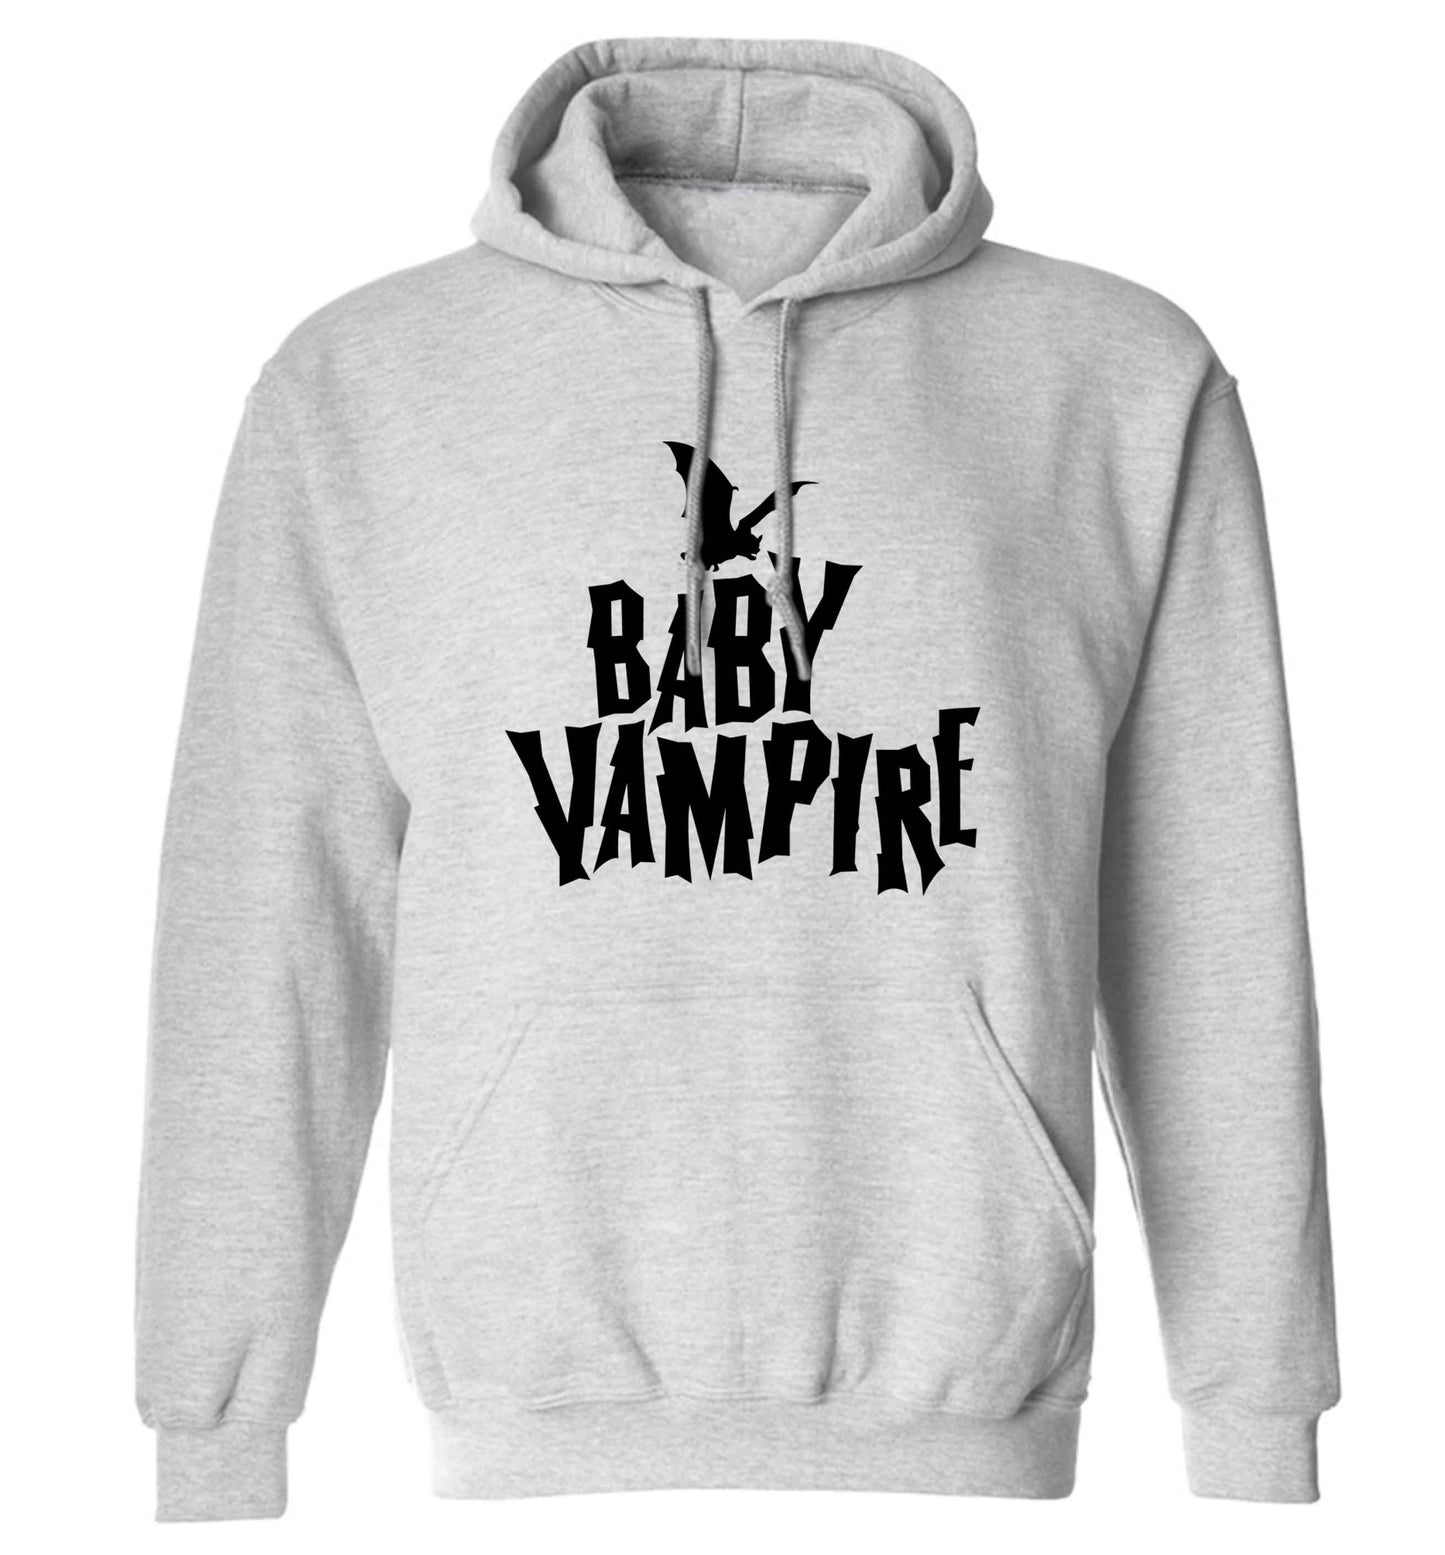 Baby vampire adults unisex grey hoodie 2XL